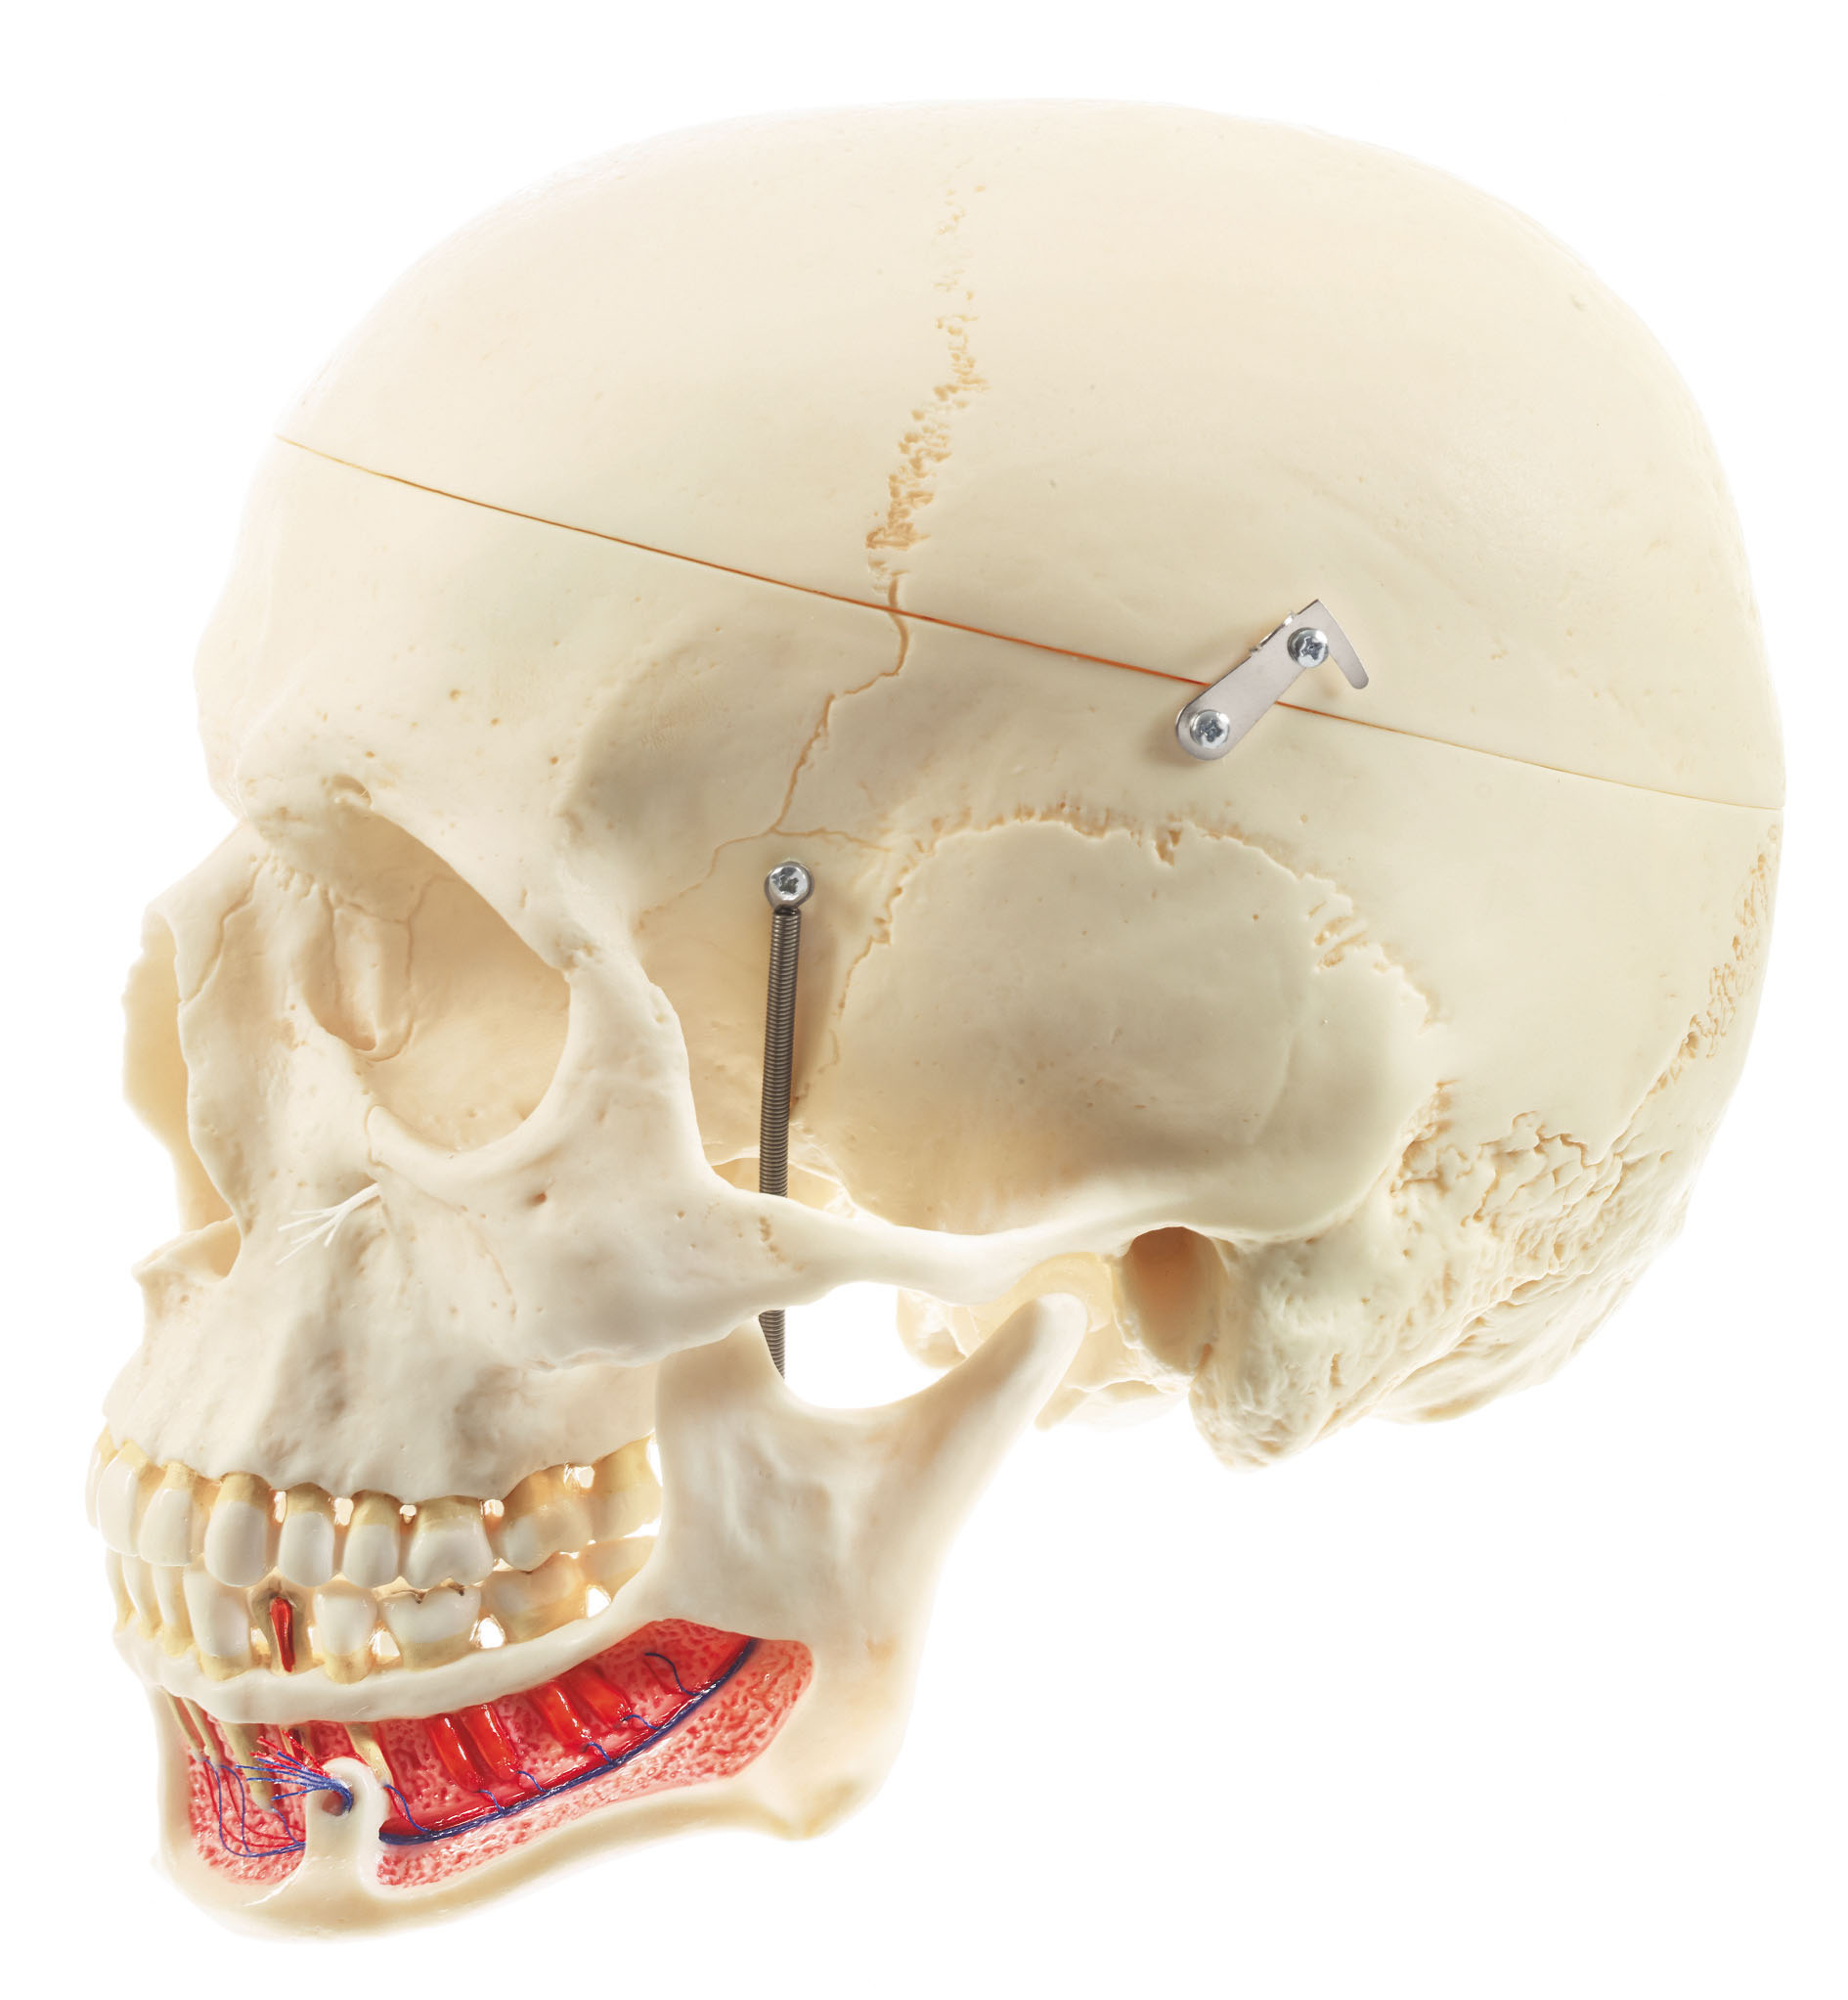 Artificial Human Skull (Separates Into 3 Parts)